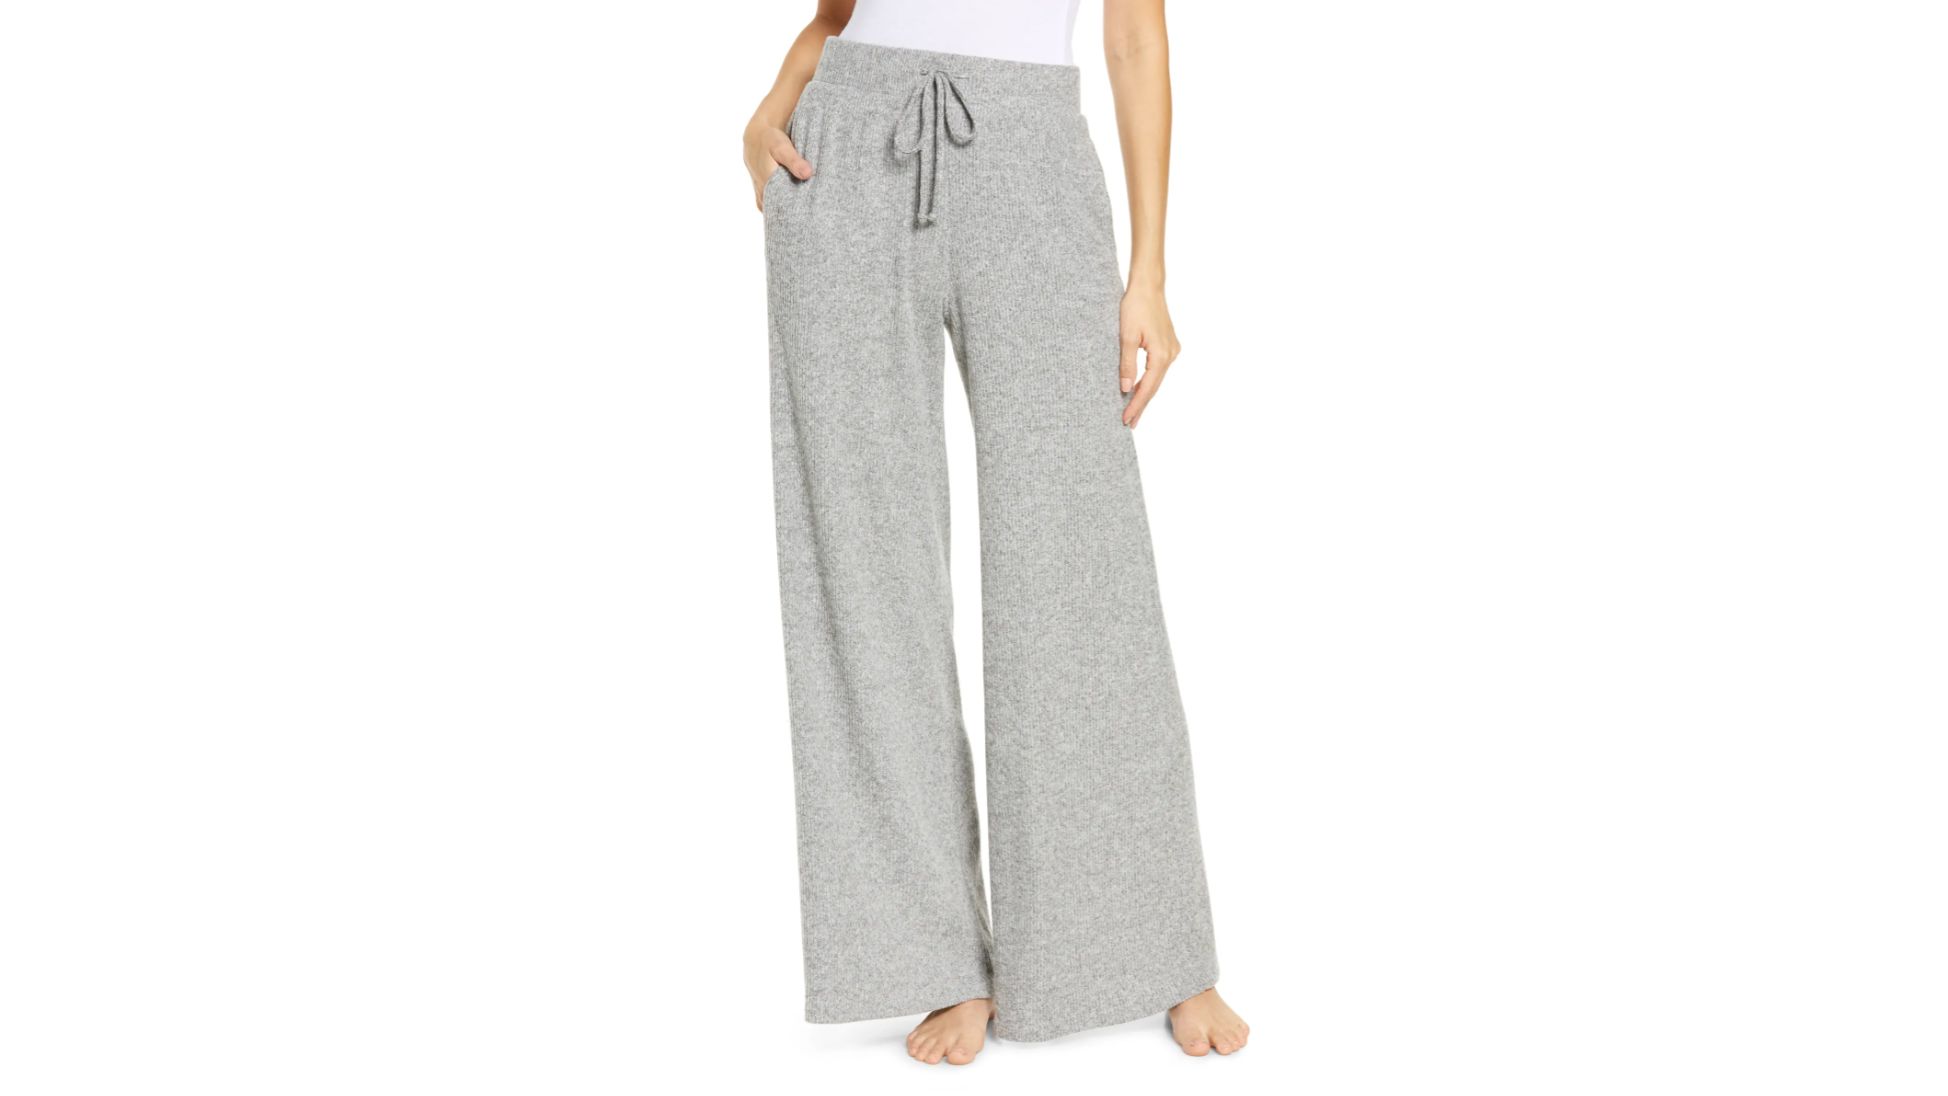 Best Deal for Jdadrh Women's Pajama Lounge Pants Comfortable Wide